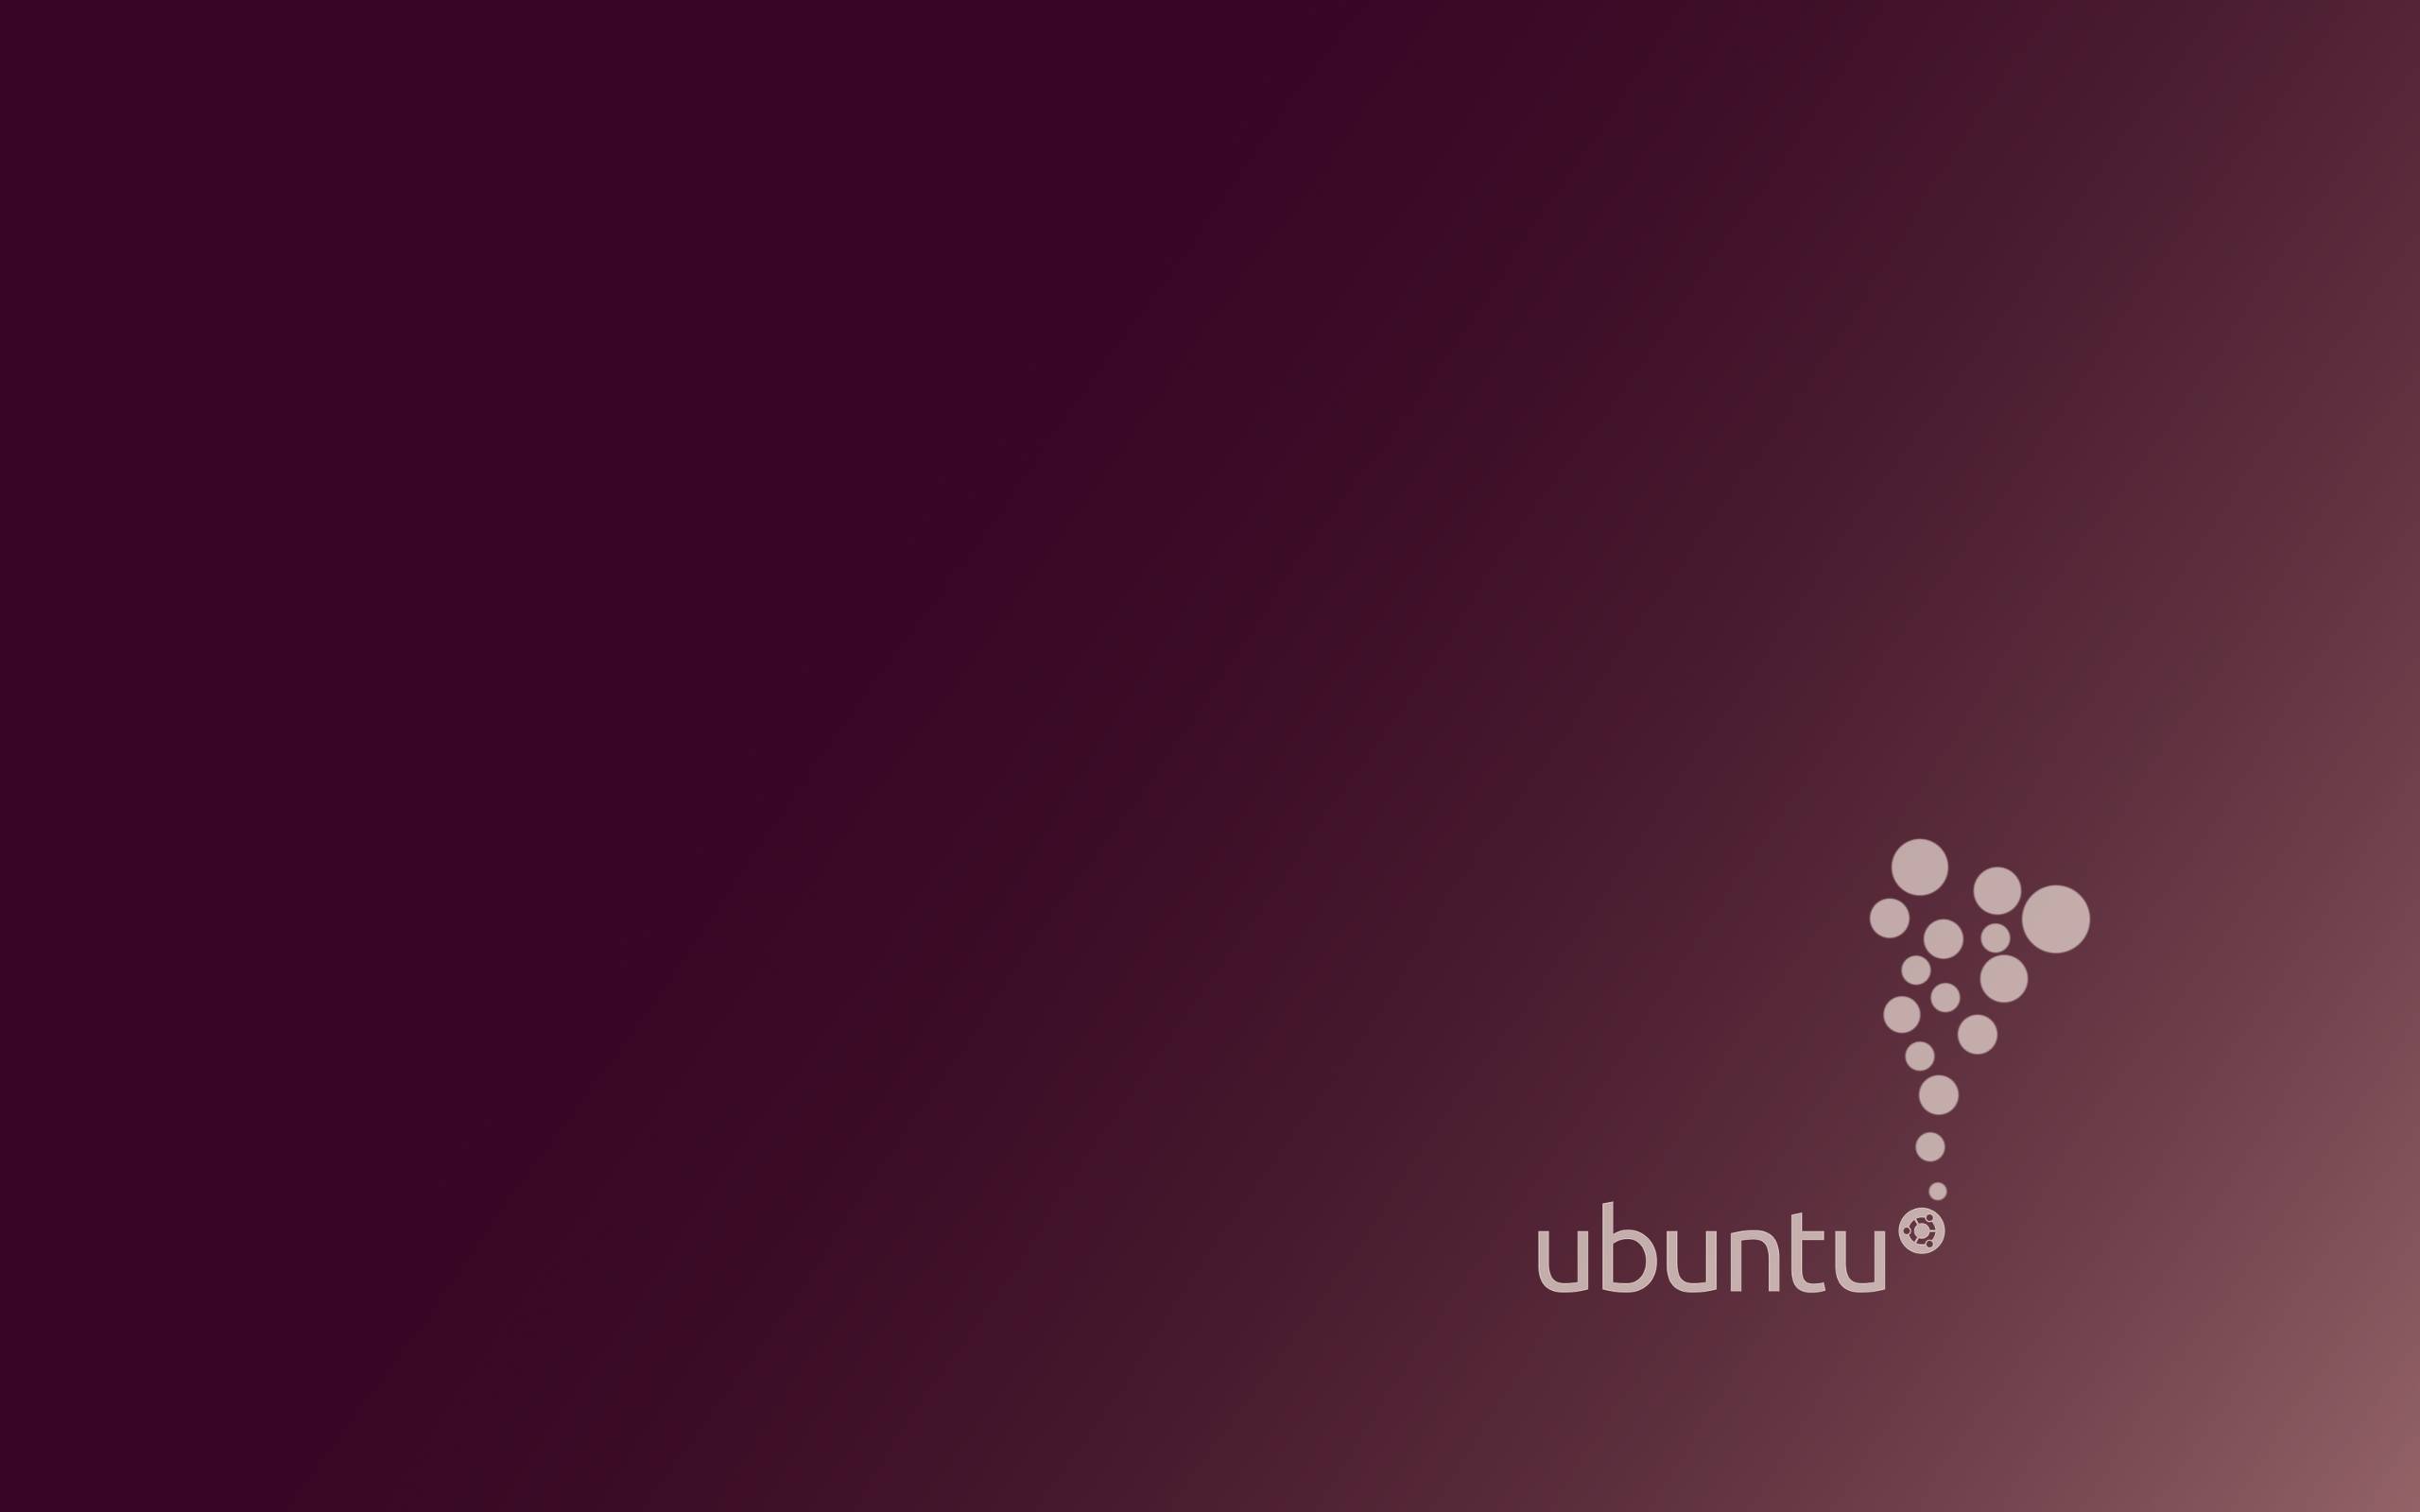 ubuntu wallpaper free